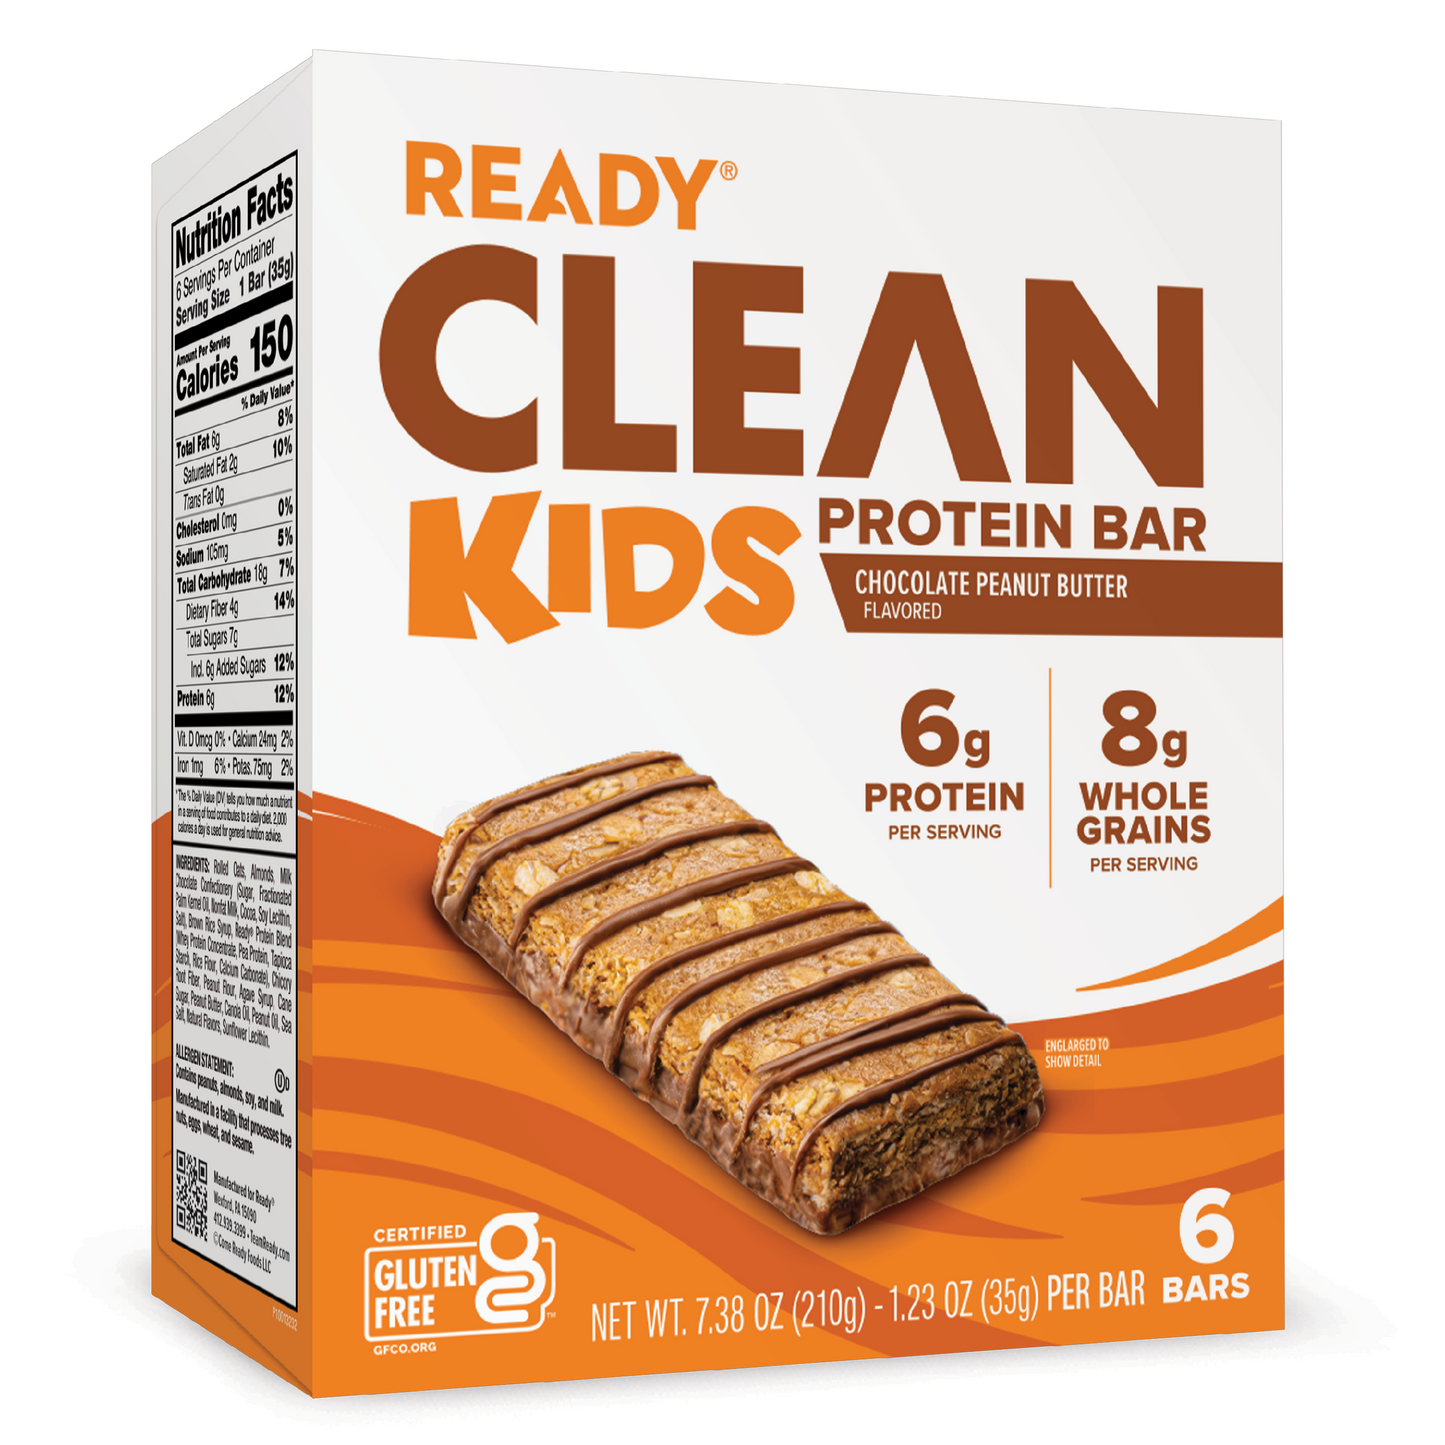 Ready® Clean Kids Whole Grain Protein Bar Chocolate Peanut Butter